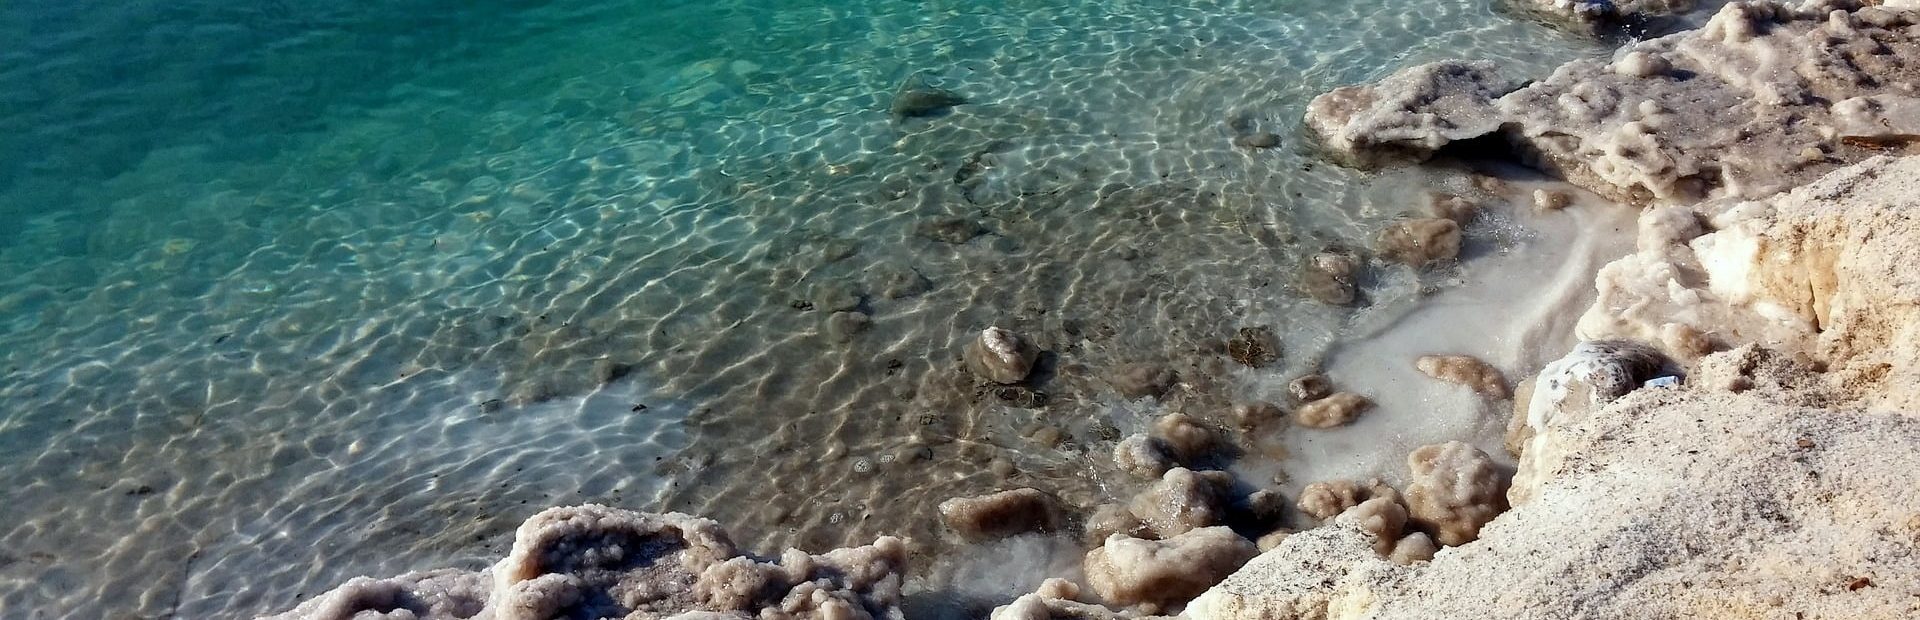 Dead-Sea-travel-blog